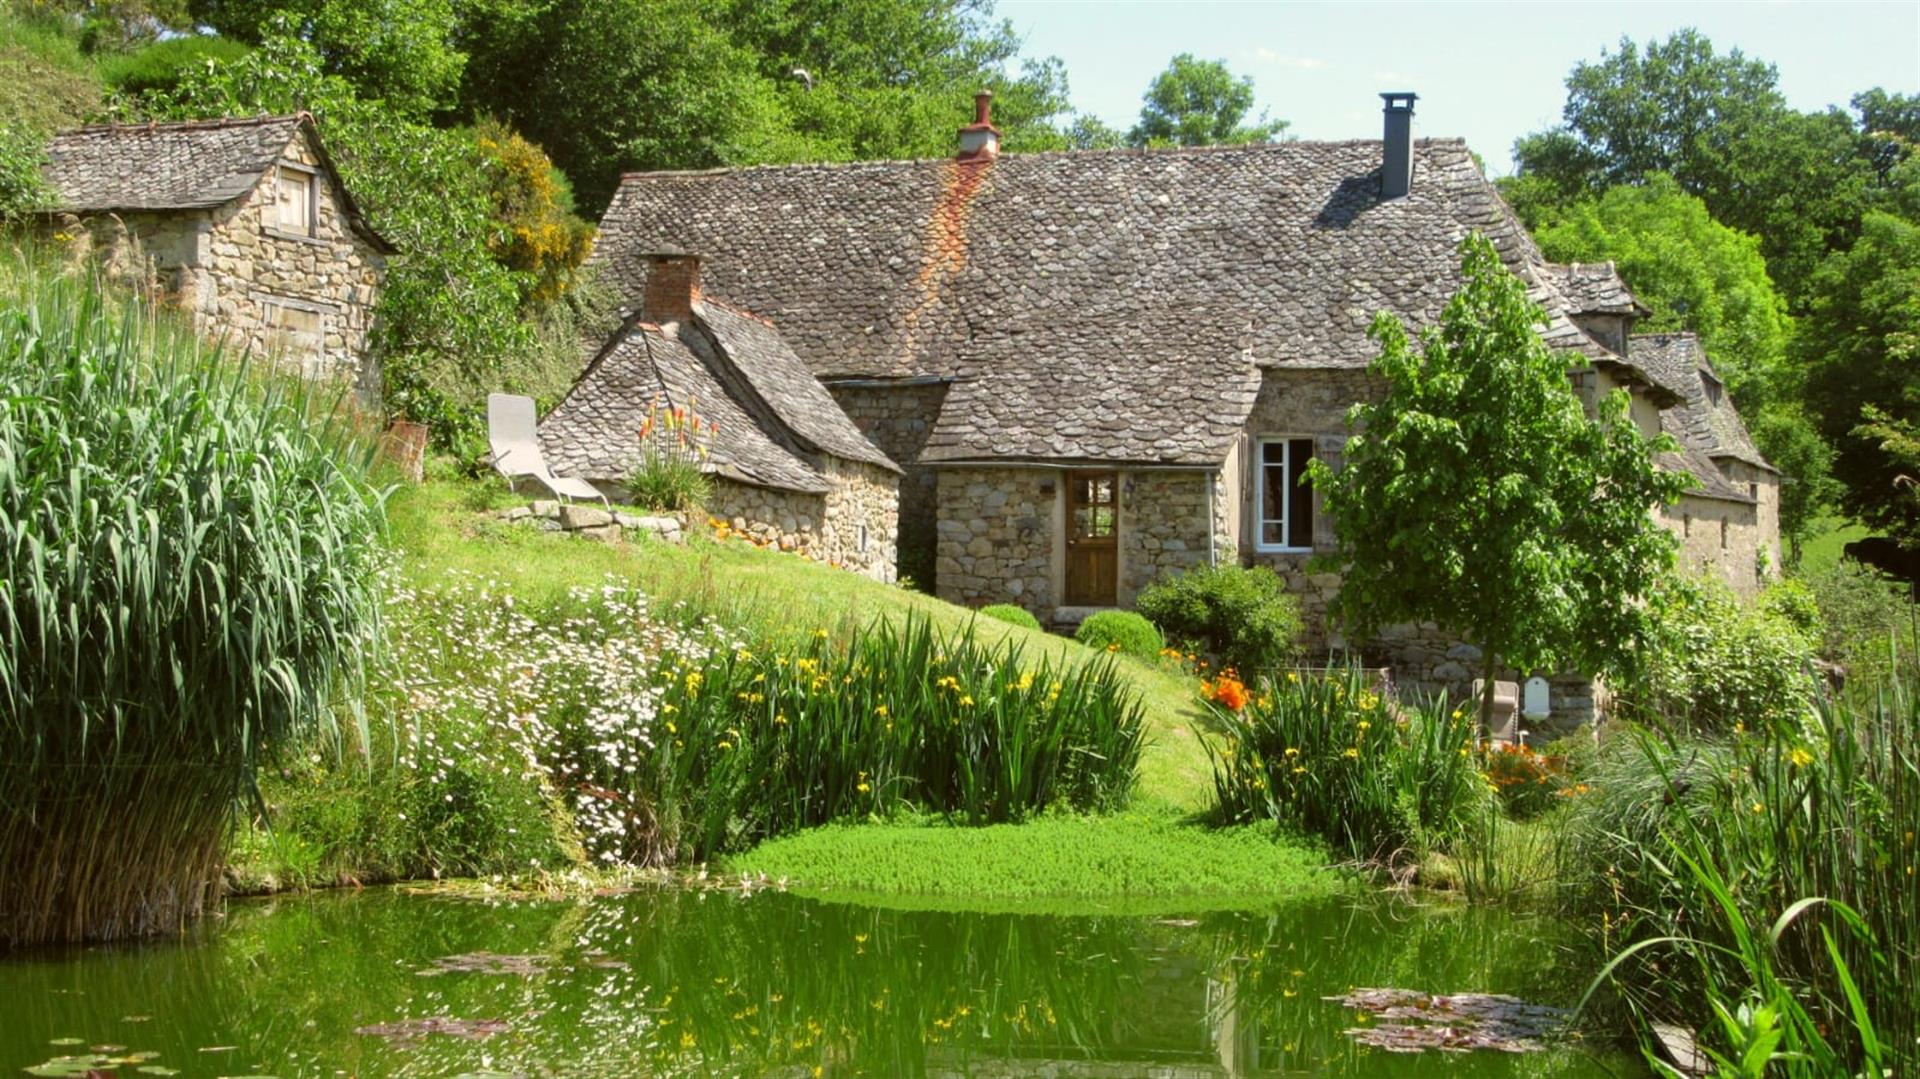 Huis in Aveyron (Frankrijk)